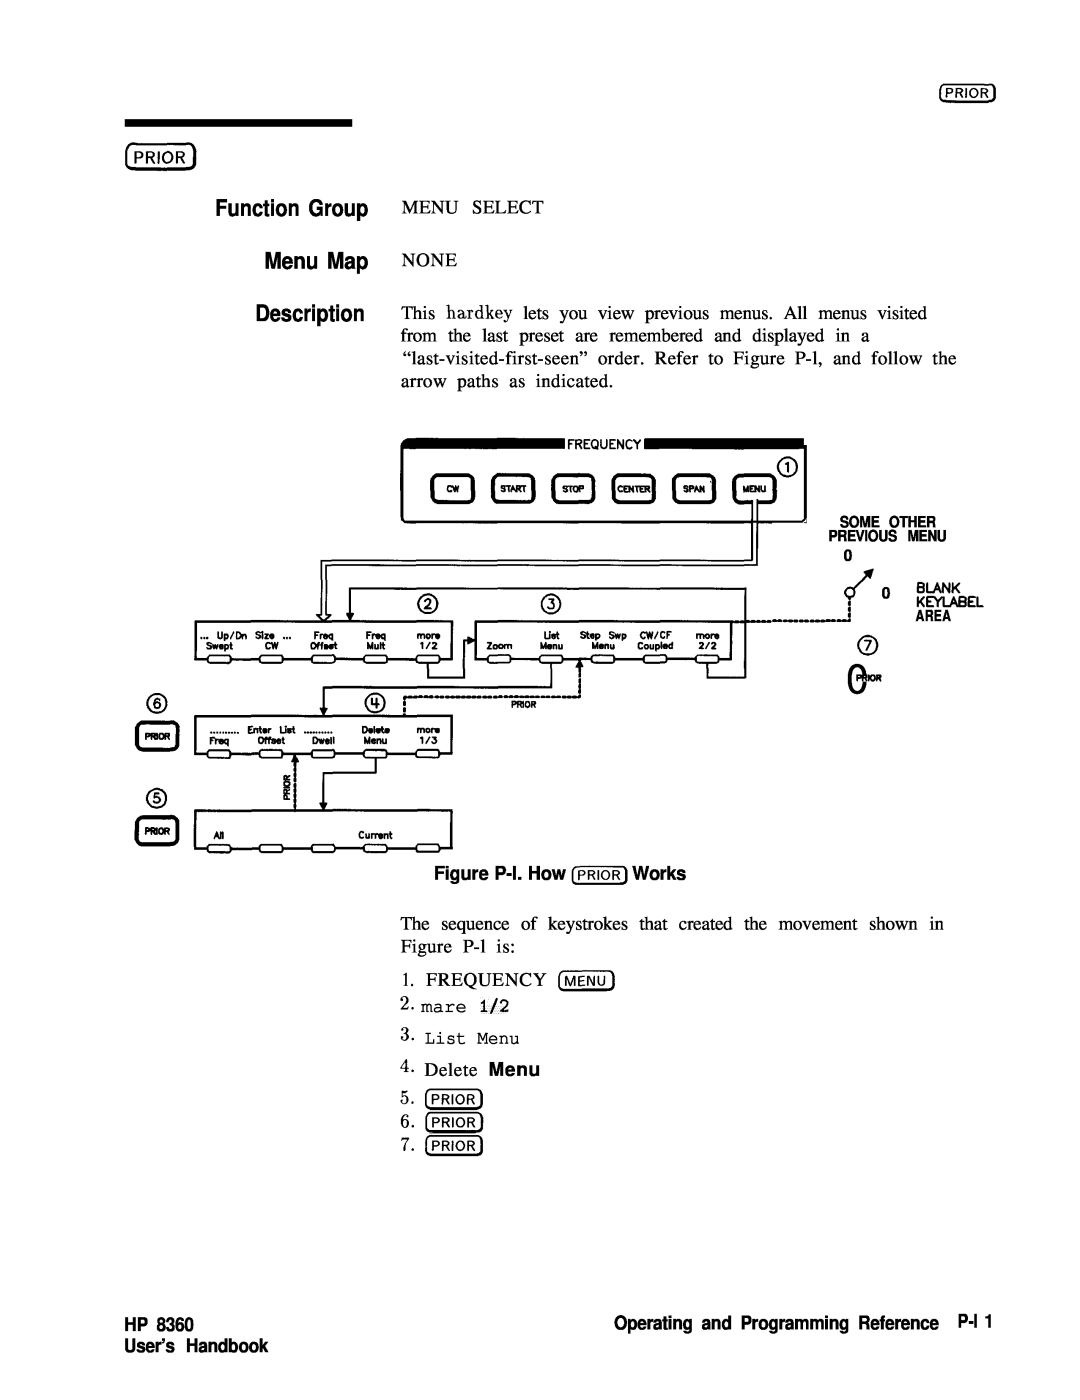 HP 83620A, 24A, 22A Function Group Menu Map Description, Menu Select None, Figure P-l. How PRIOR Works, User’s Handbook 